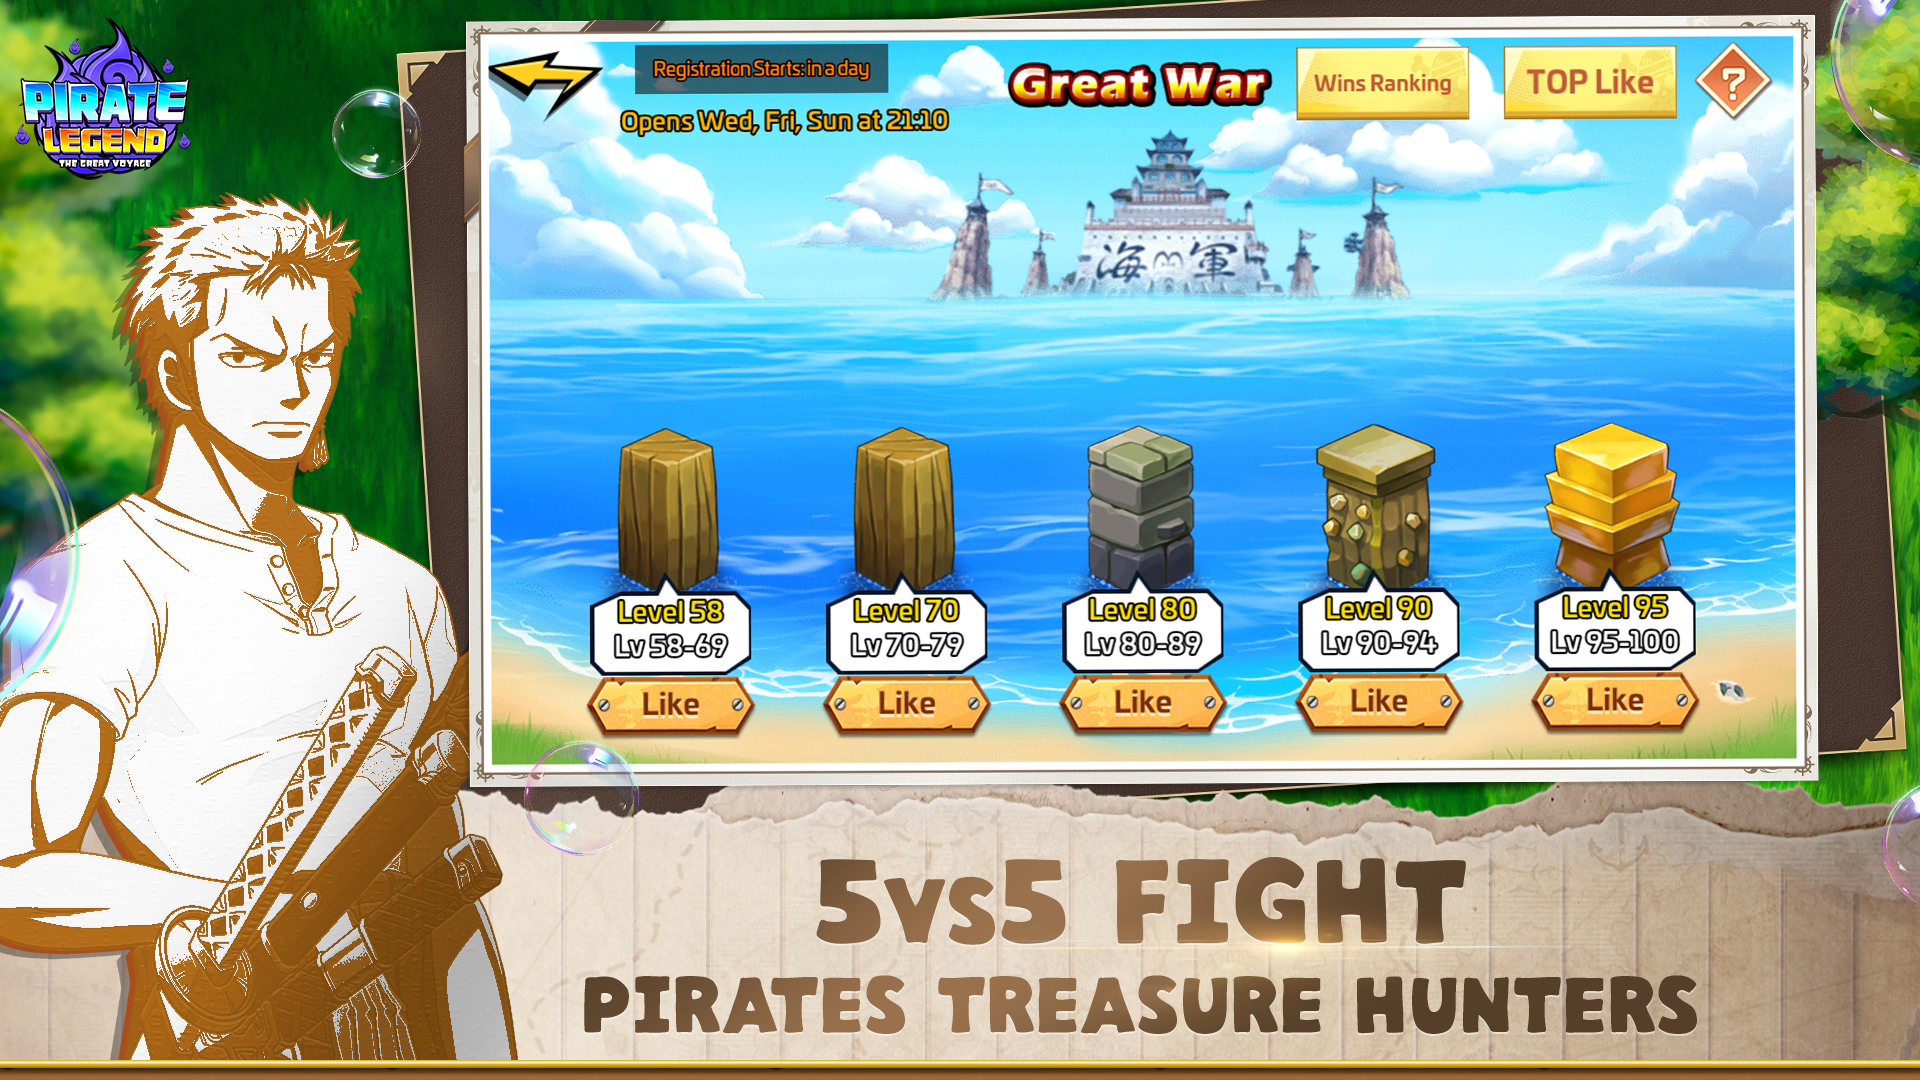 Screenshot of Pirate Legends: Great Voyage